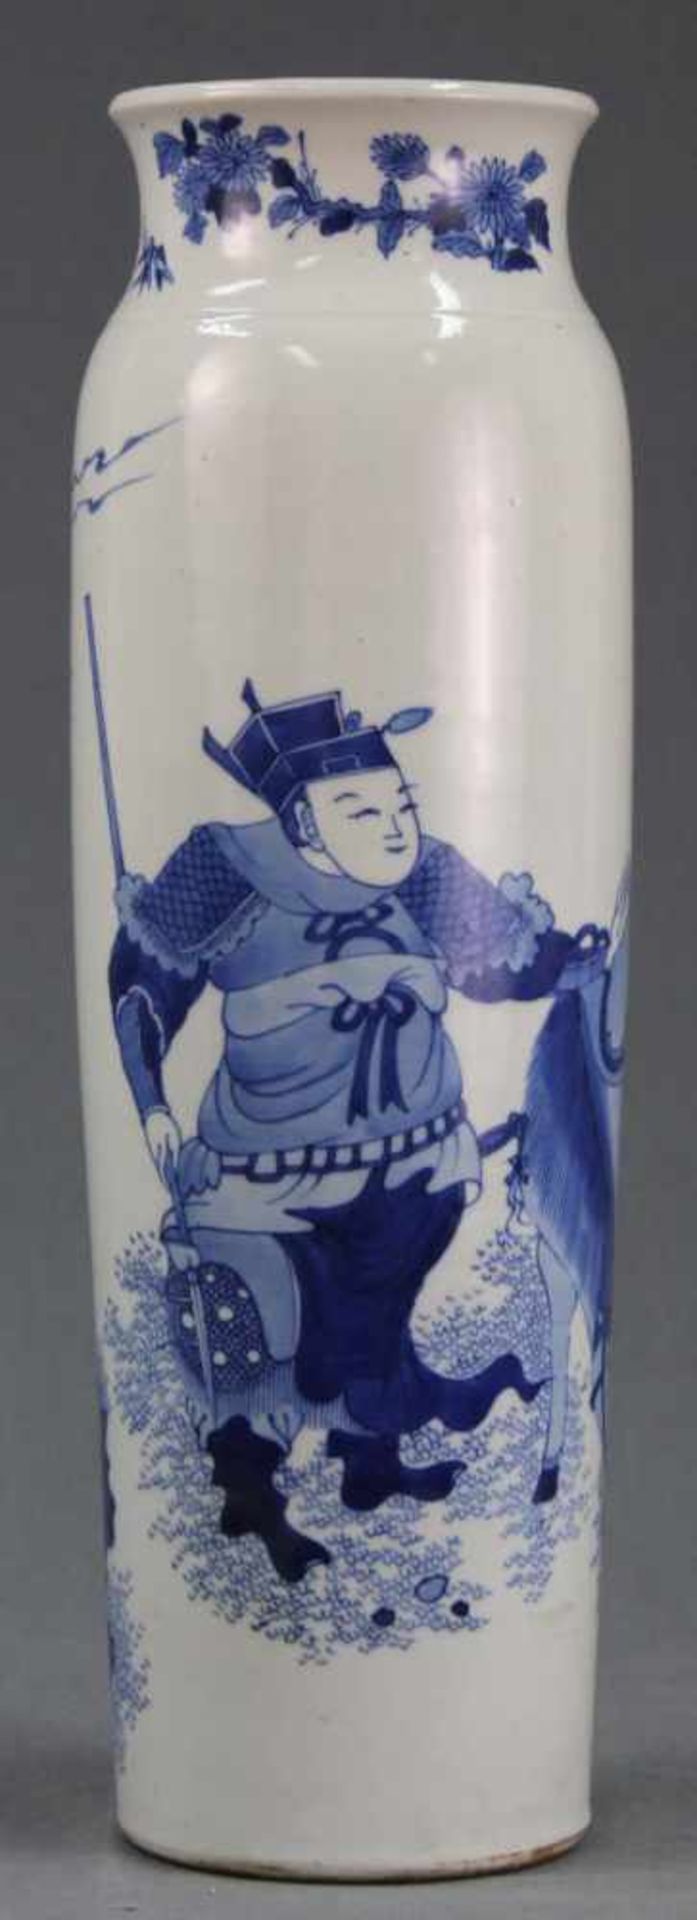 Vase Blau - Weiß? - Porzellan. China alt, um 1900. 47,5 cm hoch.Vase Blue - White? - Porcelain. - Image 5 of 9